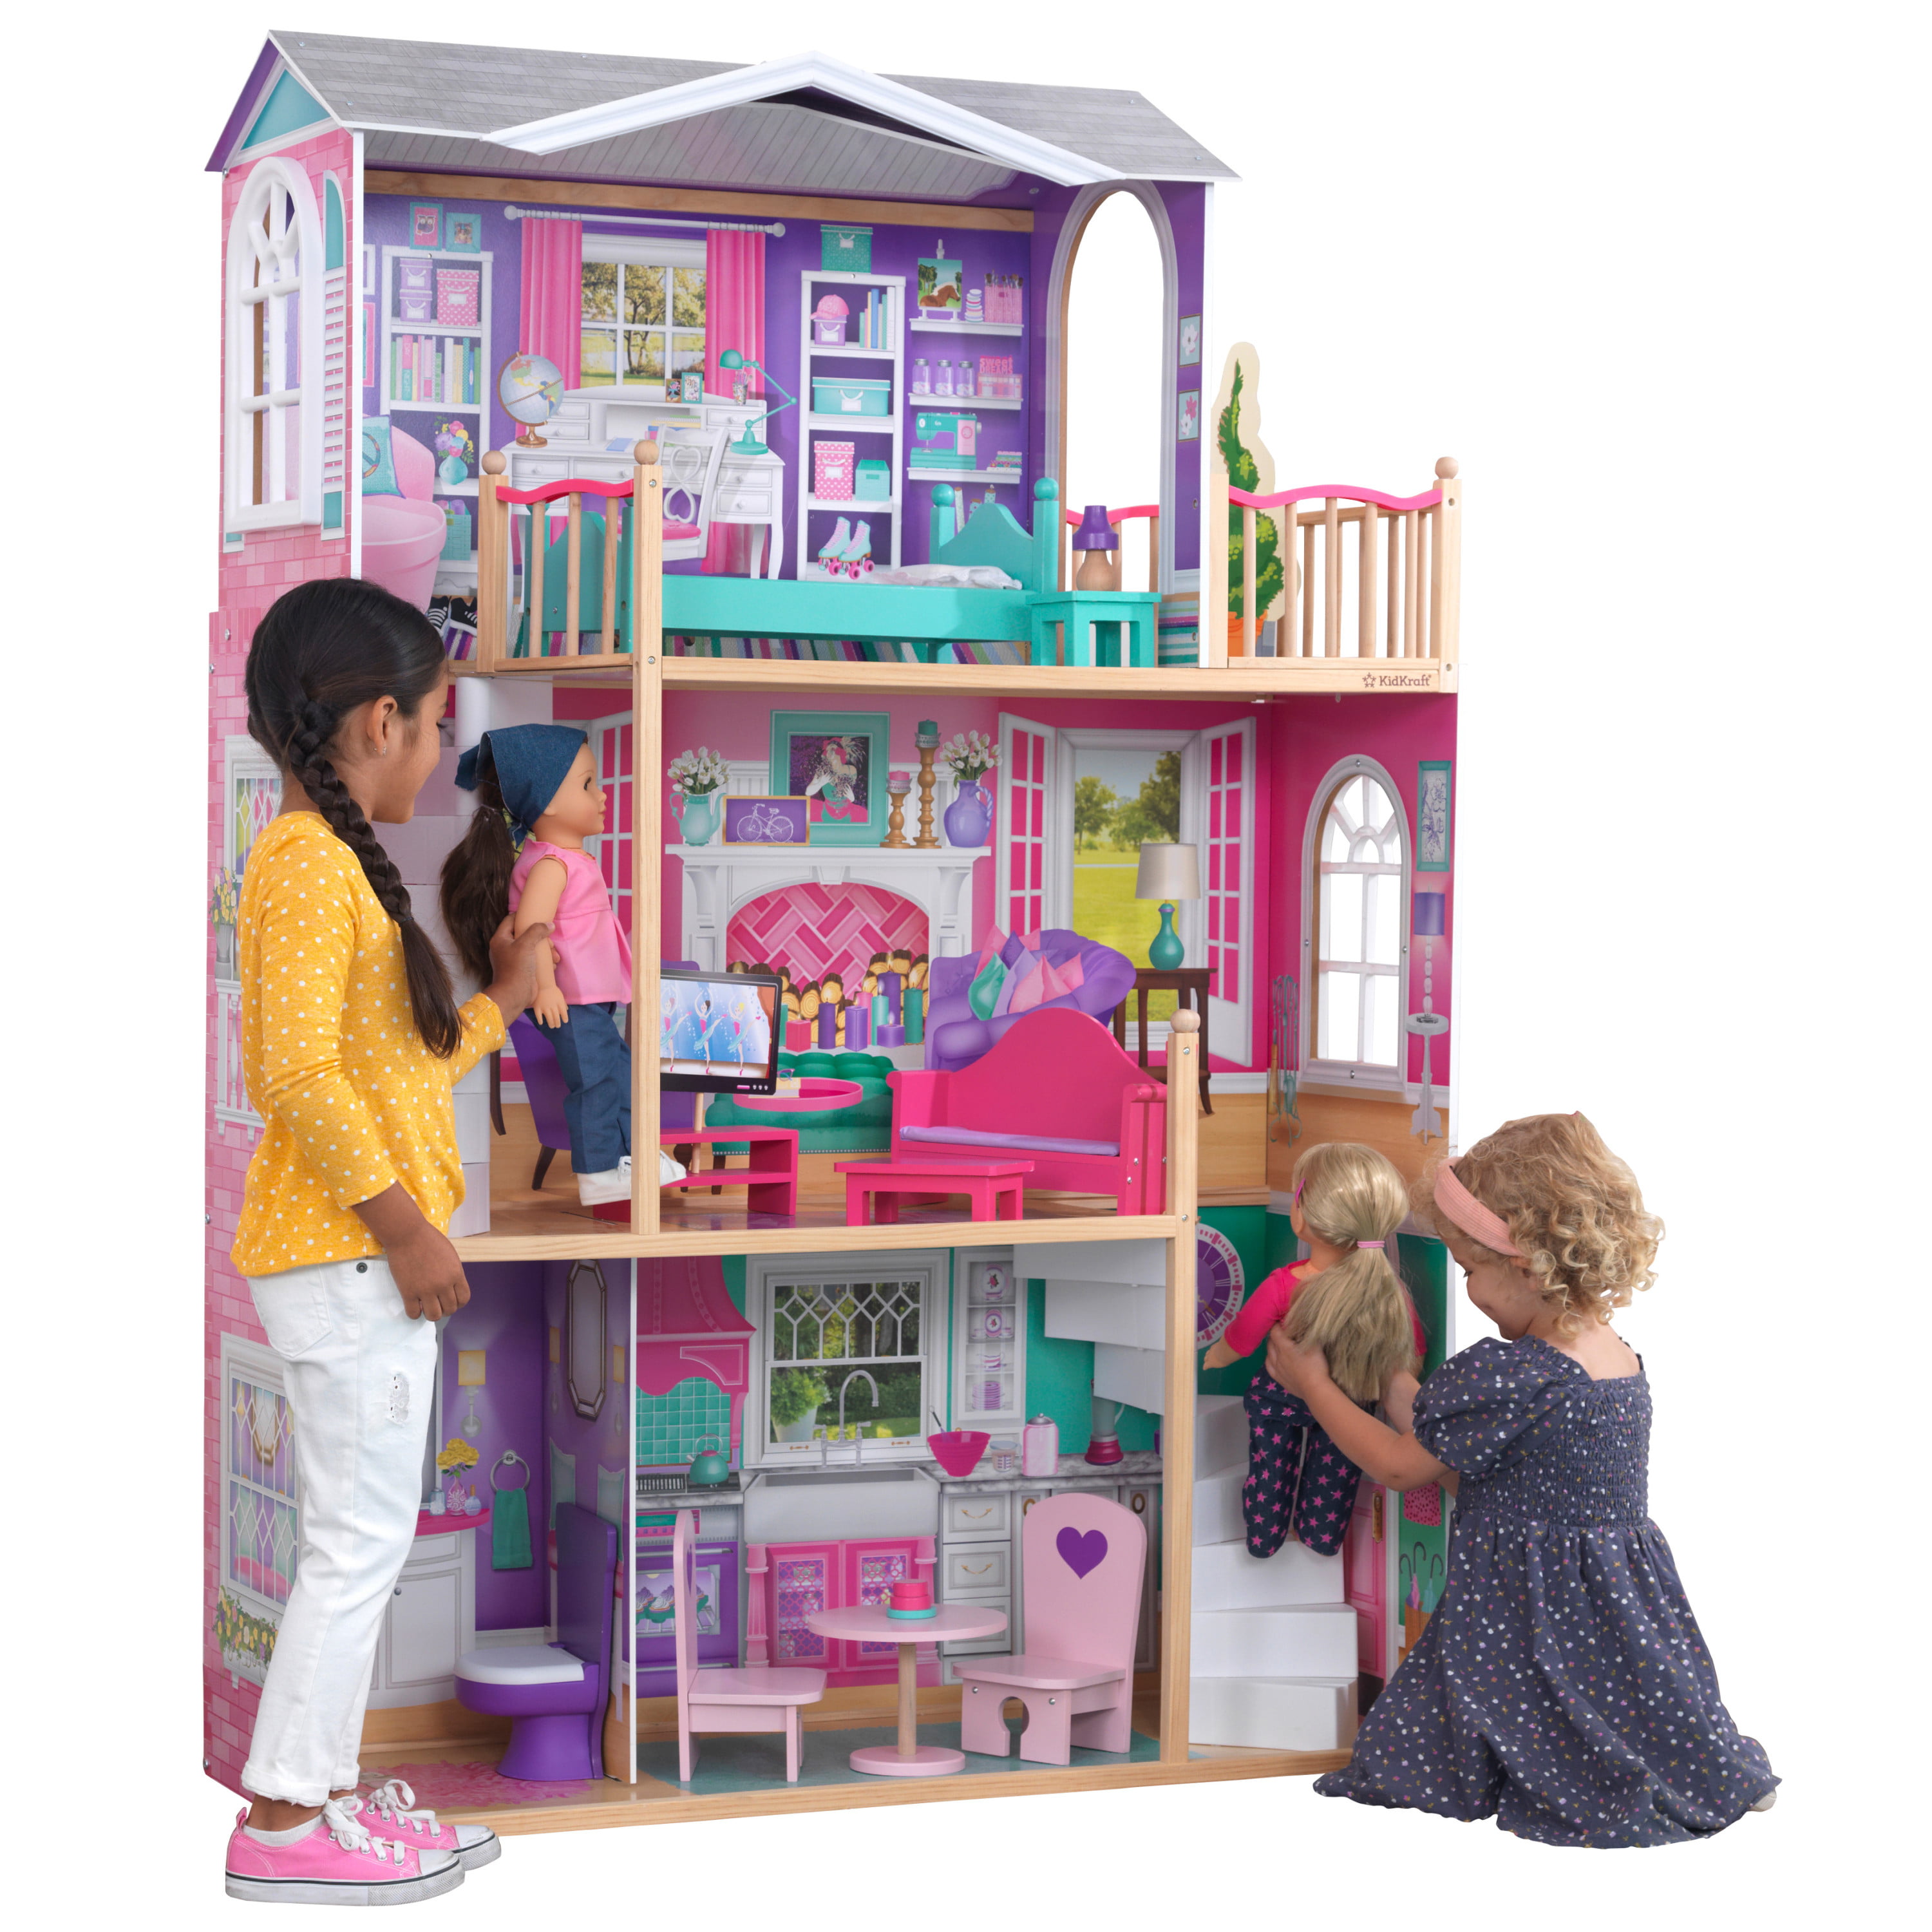 Kidkraft Amelia Dollhouse Wooden House with Lift fits Barbie sized Dolls 